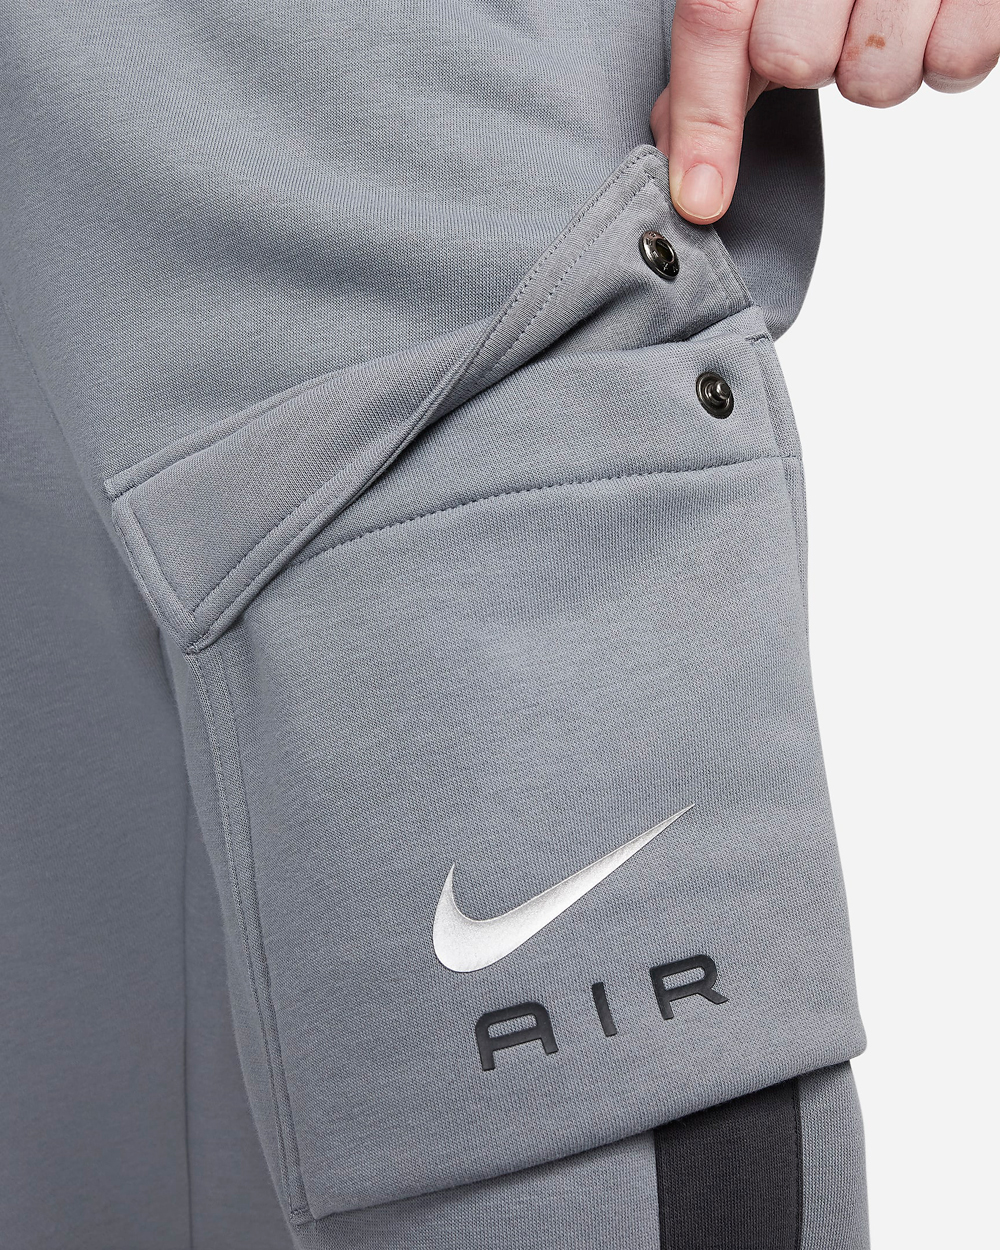 Nike-Air-Fleece-Cargo-Pants-Cool-Grey-1